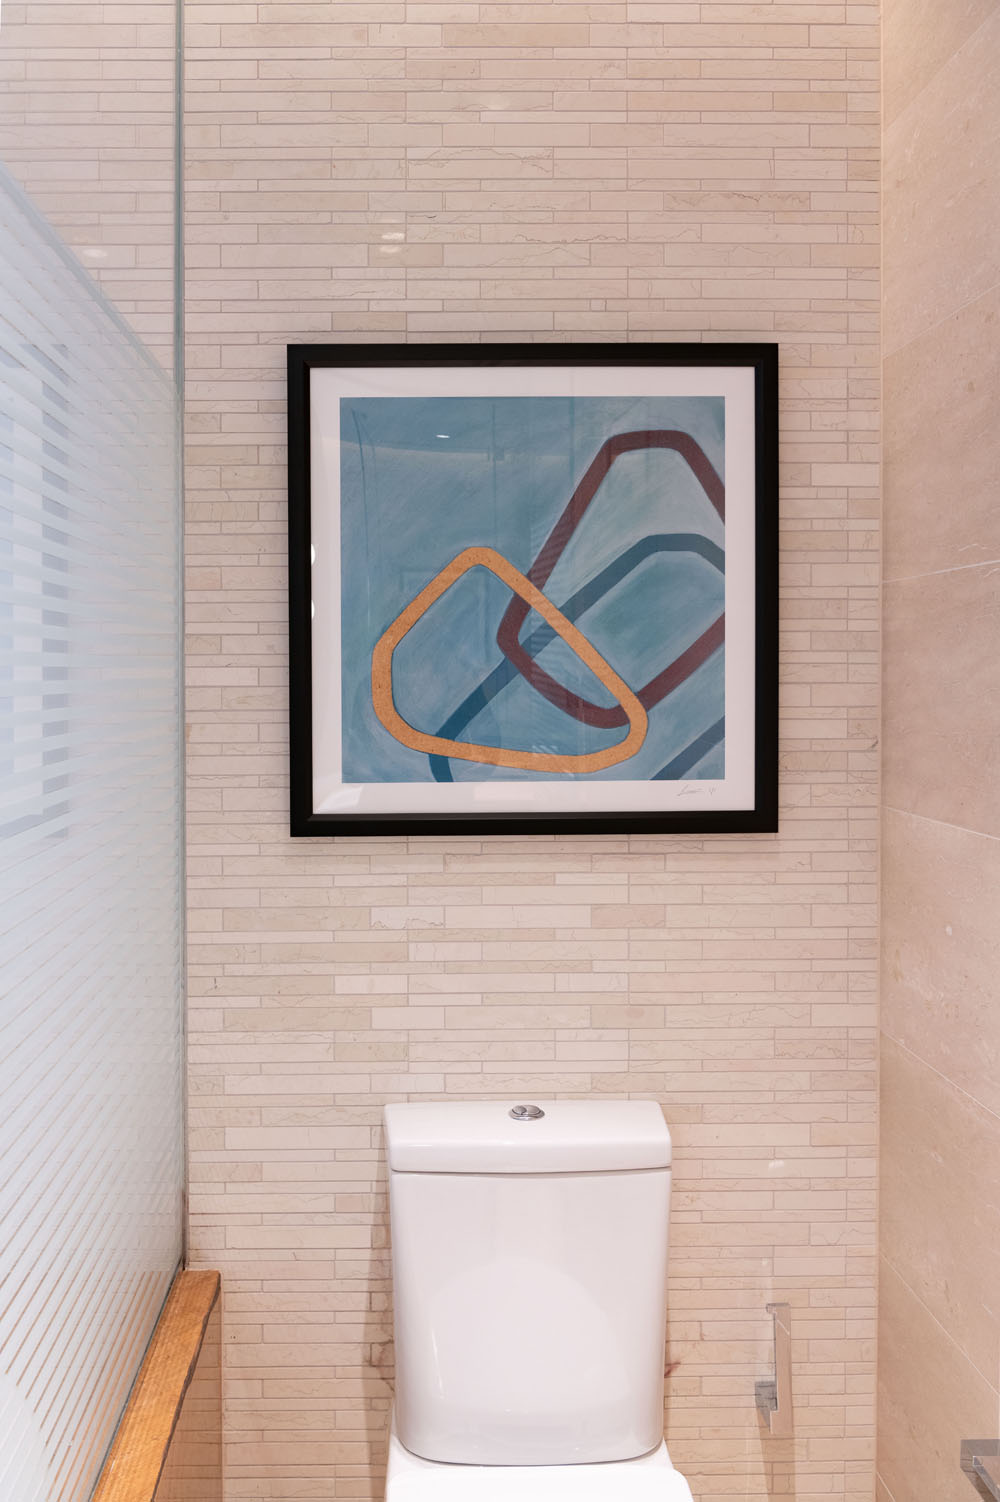 The Star Sydney - hotel bathroom - Lava Jafari artwork